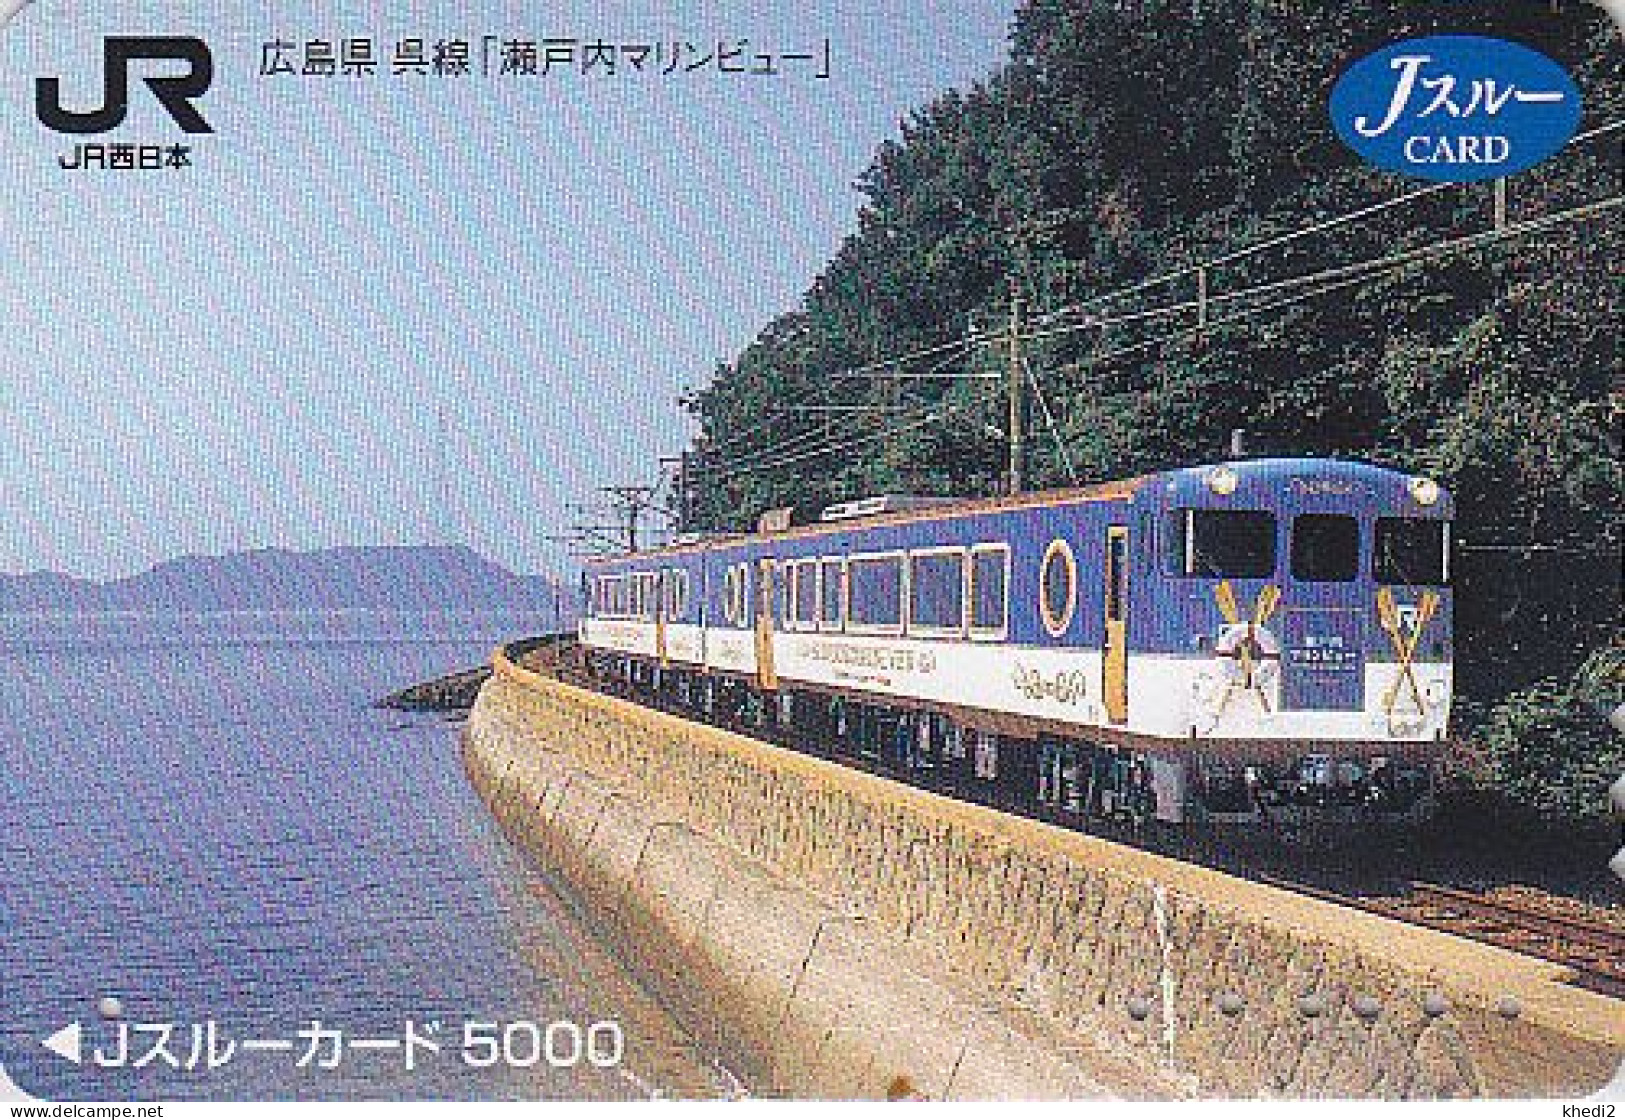 Carte Prépayée JAPON - TRAIN Décoré Bord De Mer Sea Side - JAPAN Prepaid JR J Card - ZUG Eisenbahn - TREIN - 3777 - Eisenbahnen